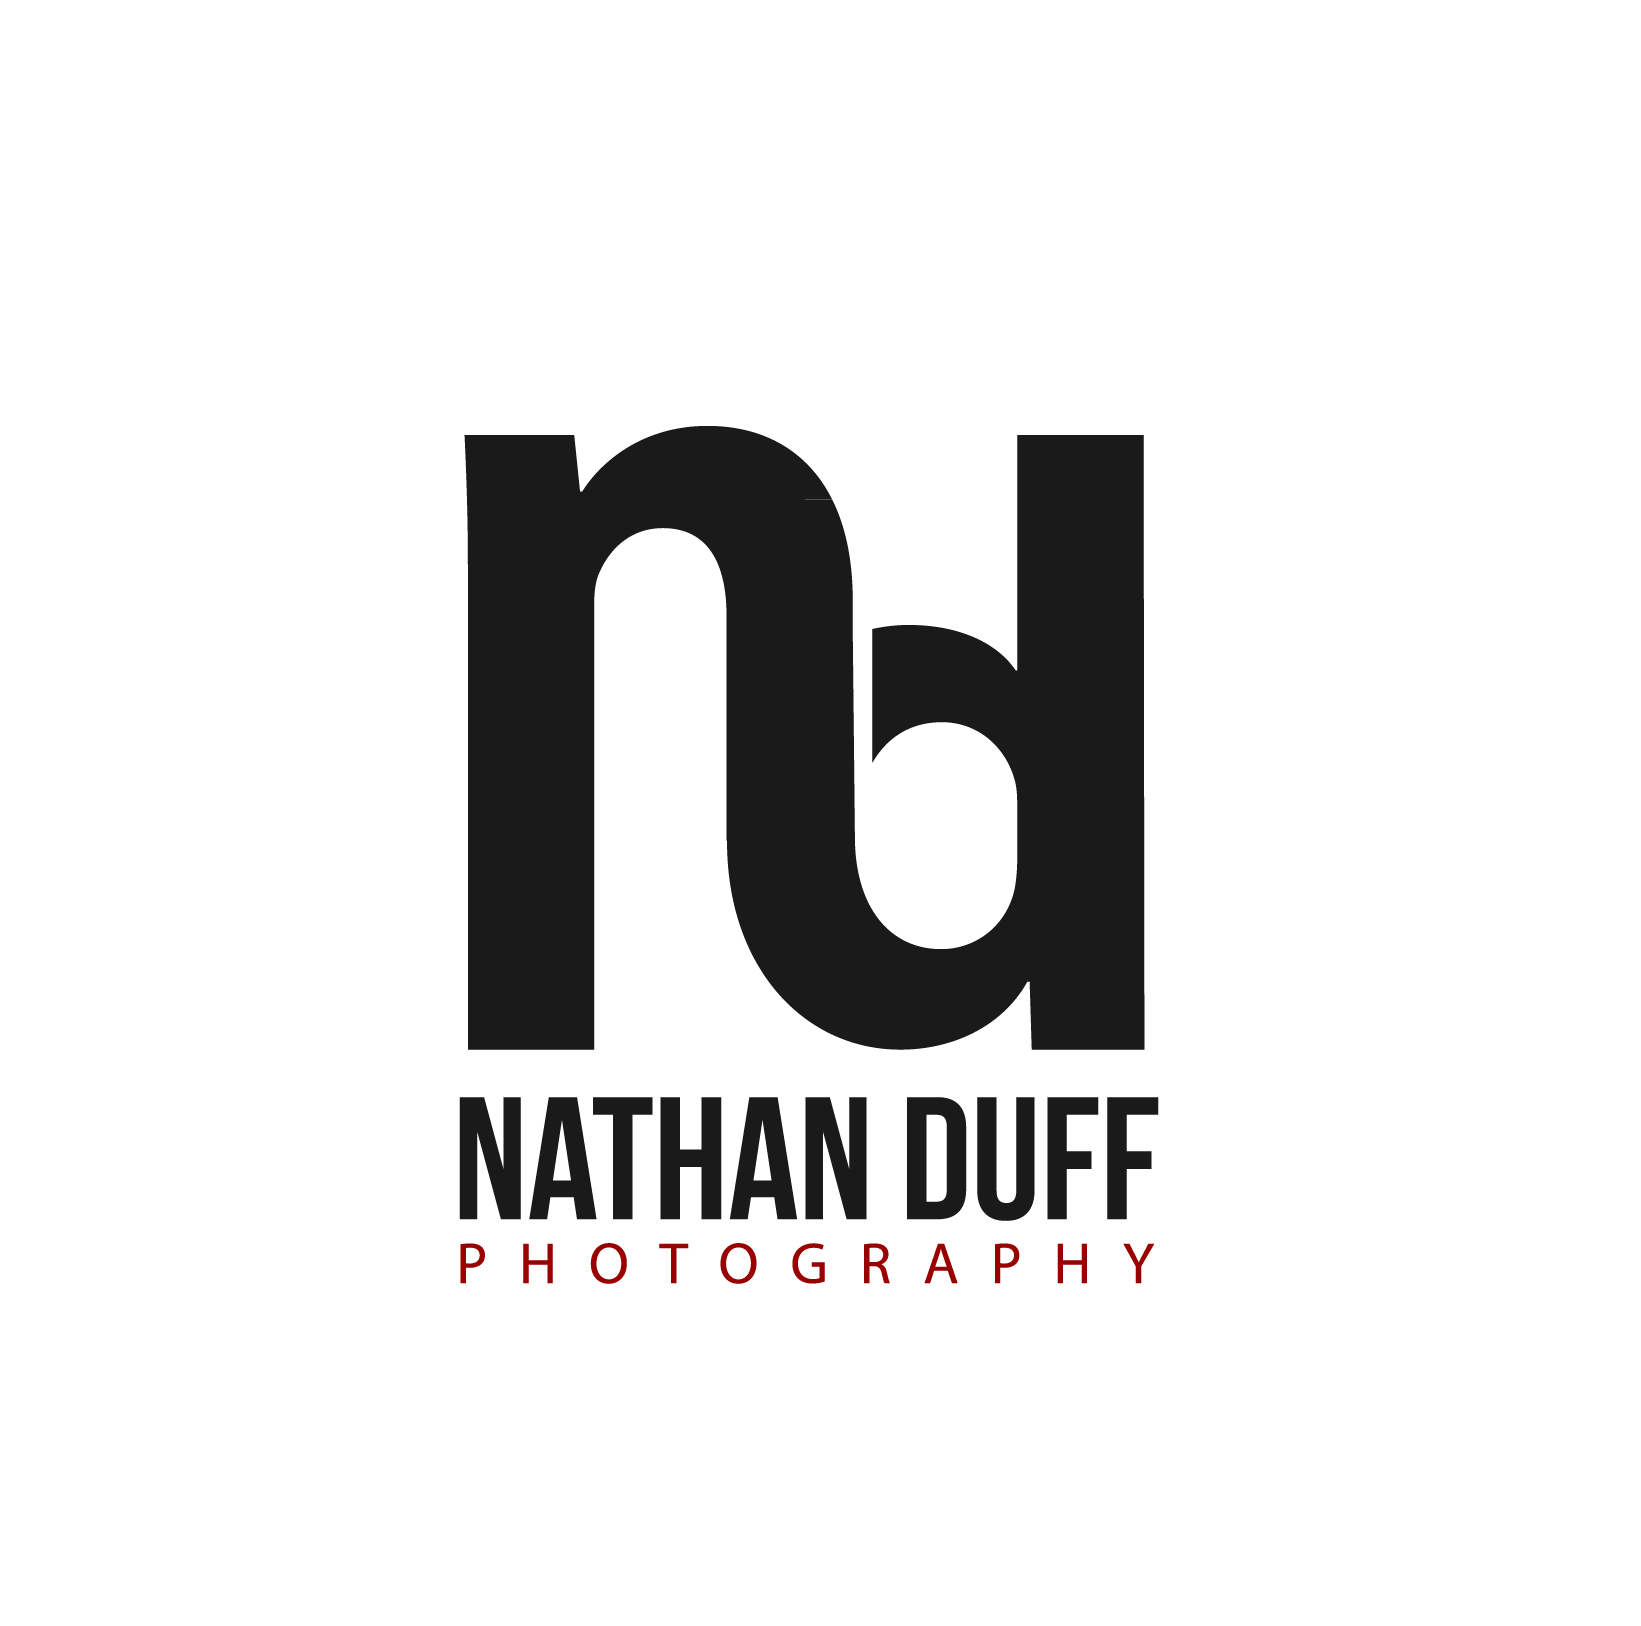 Nathan Duff Photography